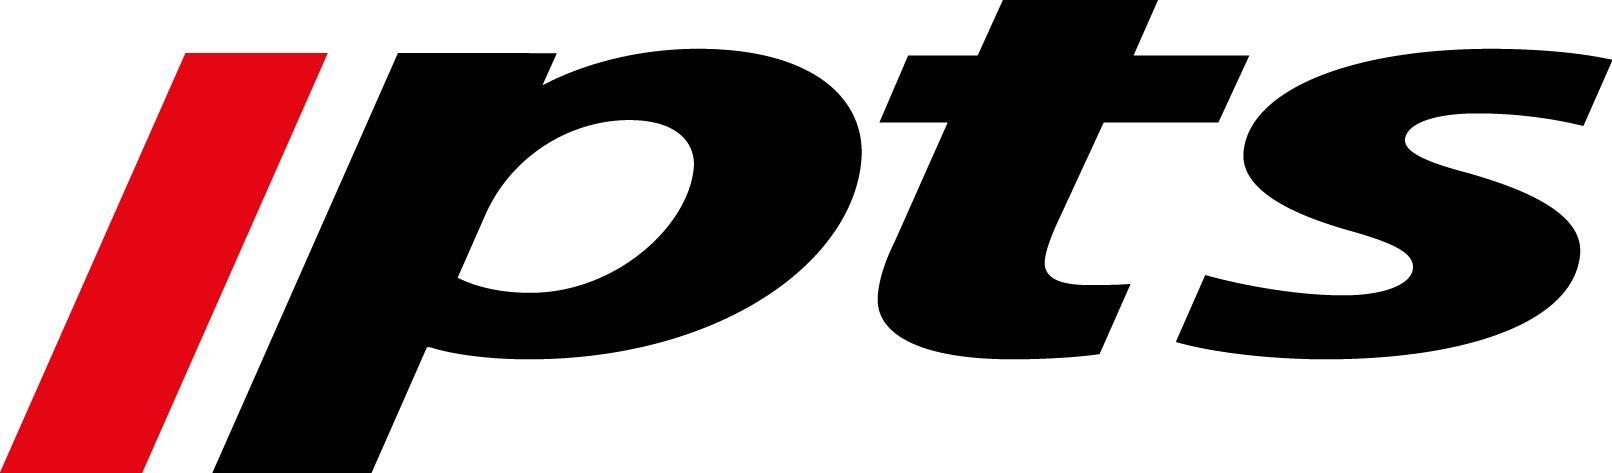 Sam Logo - New logo